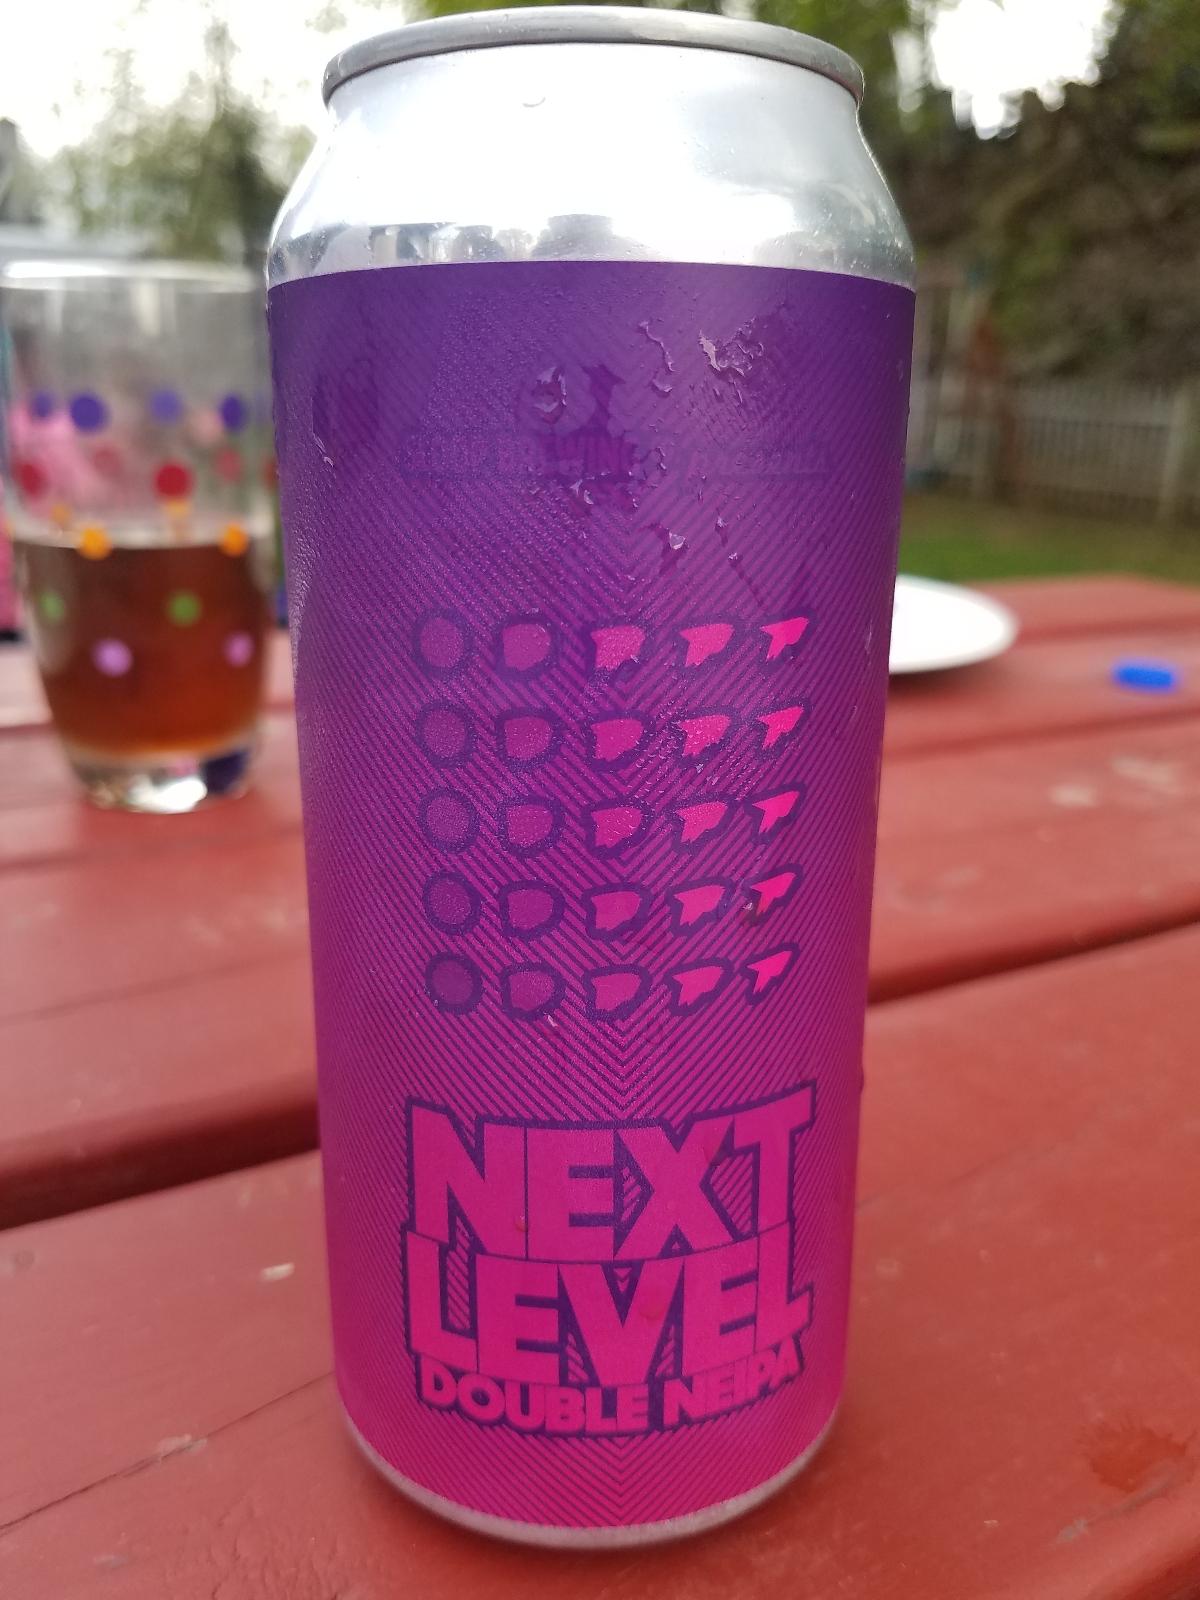 Next Level Double NEIPA